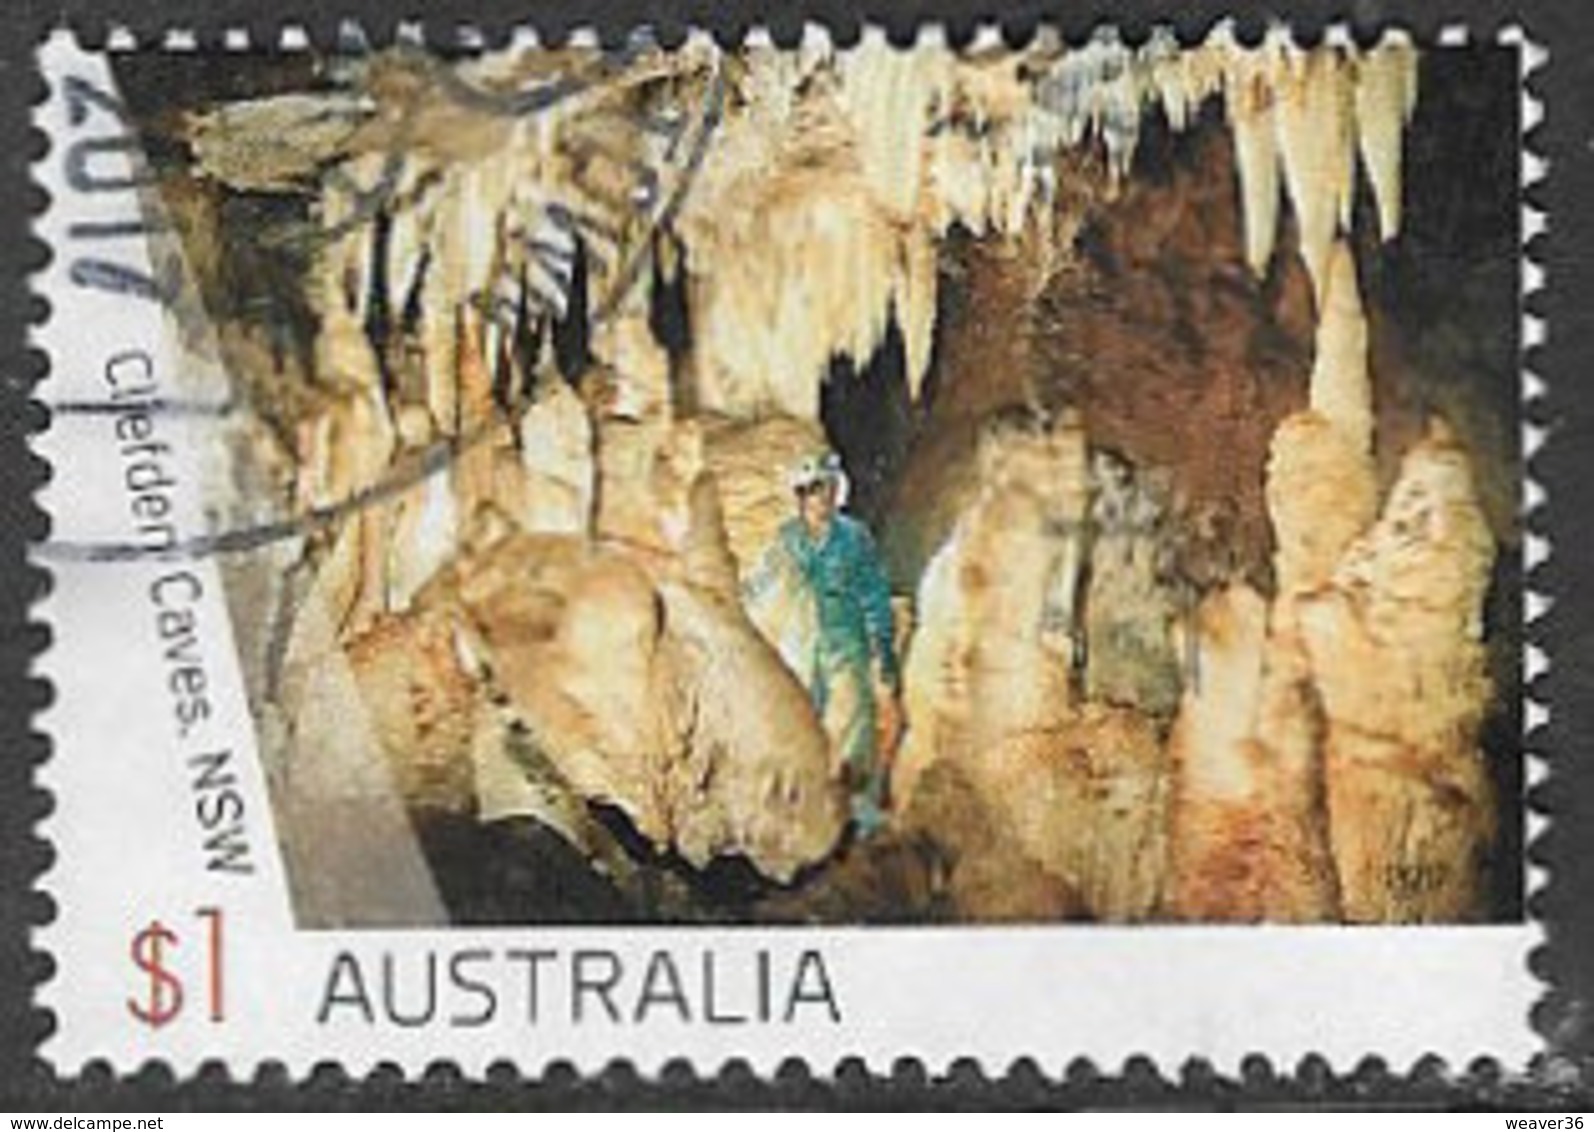 Australia 2017 Caves $1 Type 1 Sheet Stamp Good/fine Used [39/31929/ND] - Usati